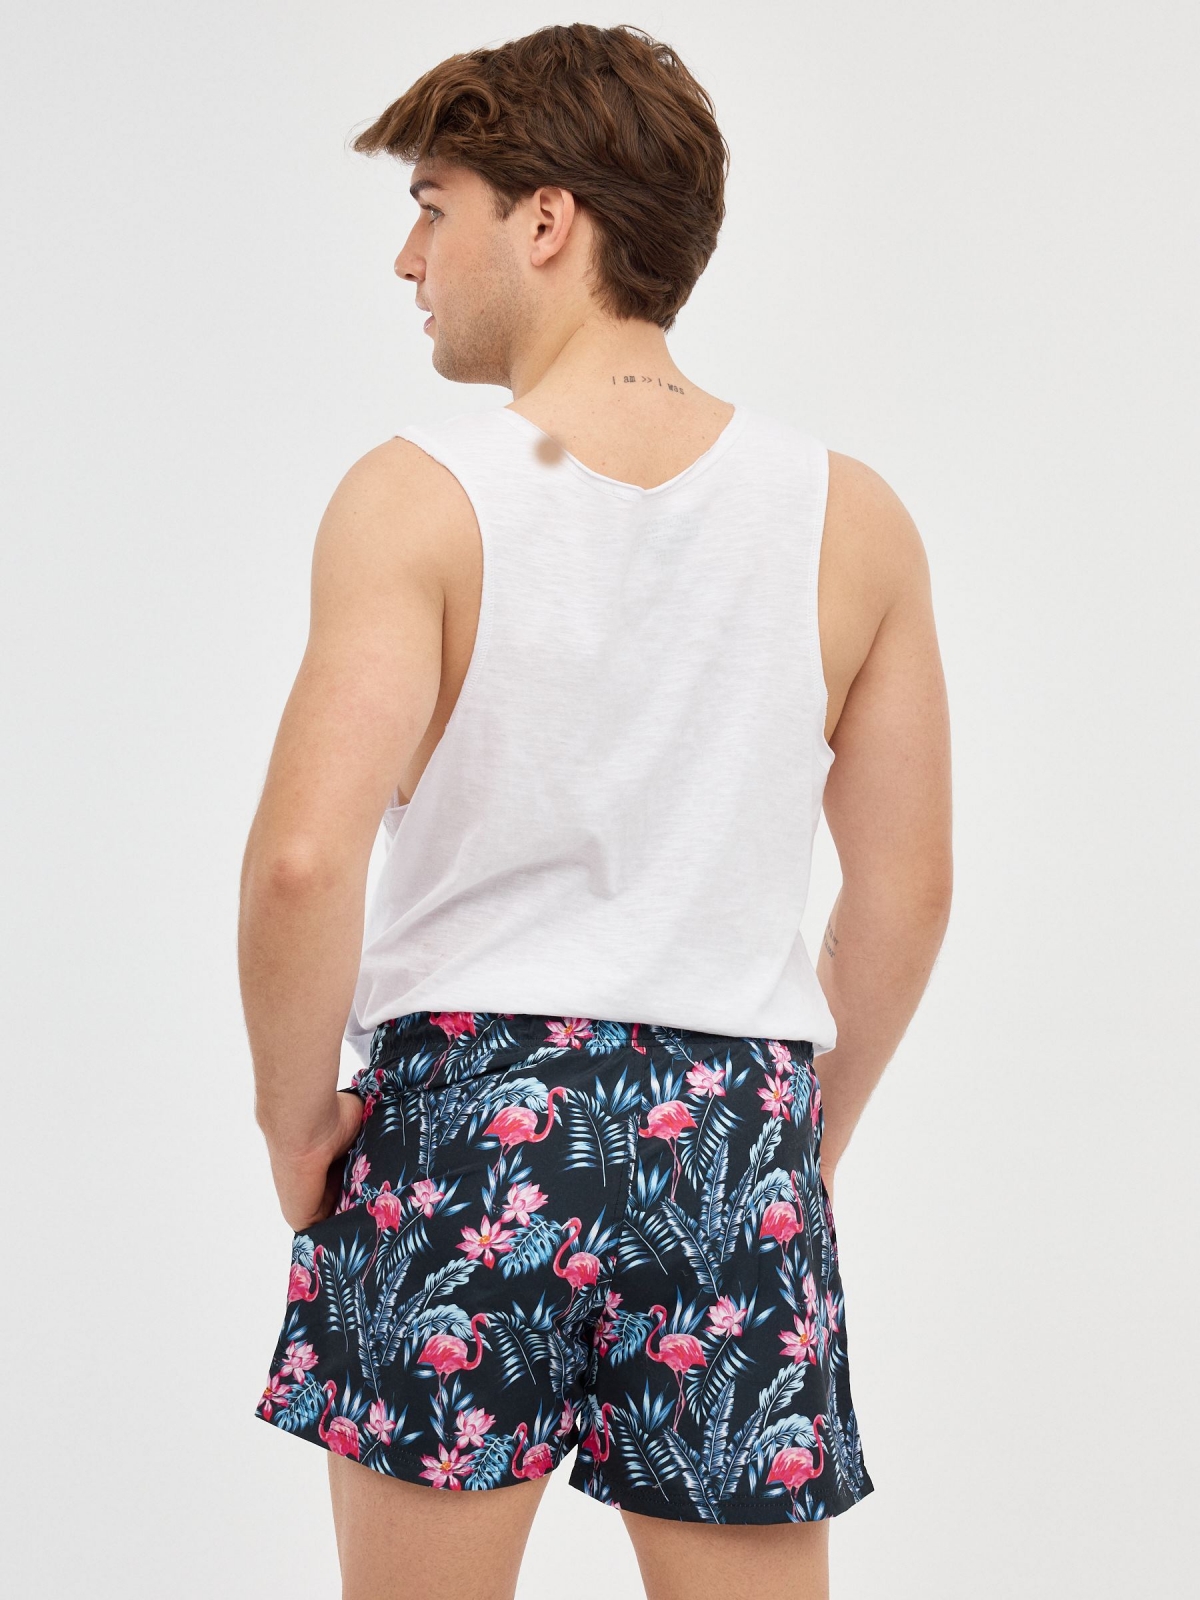 Flamingo print swimsuit black middle back view